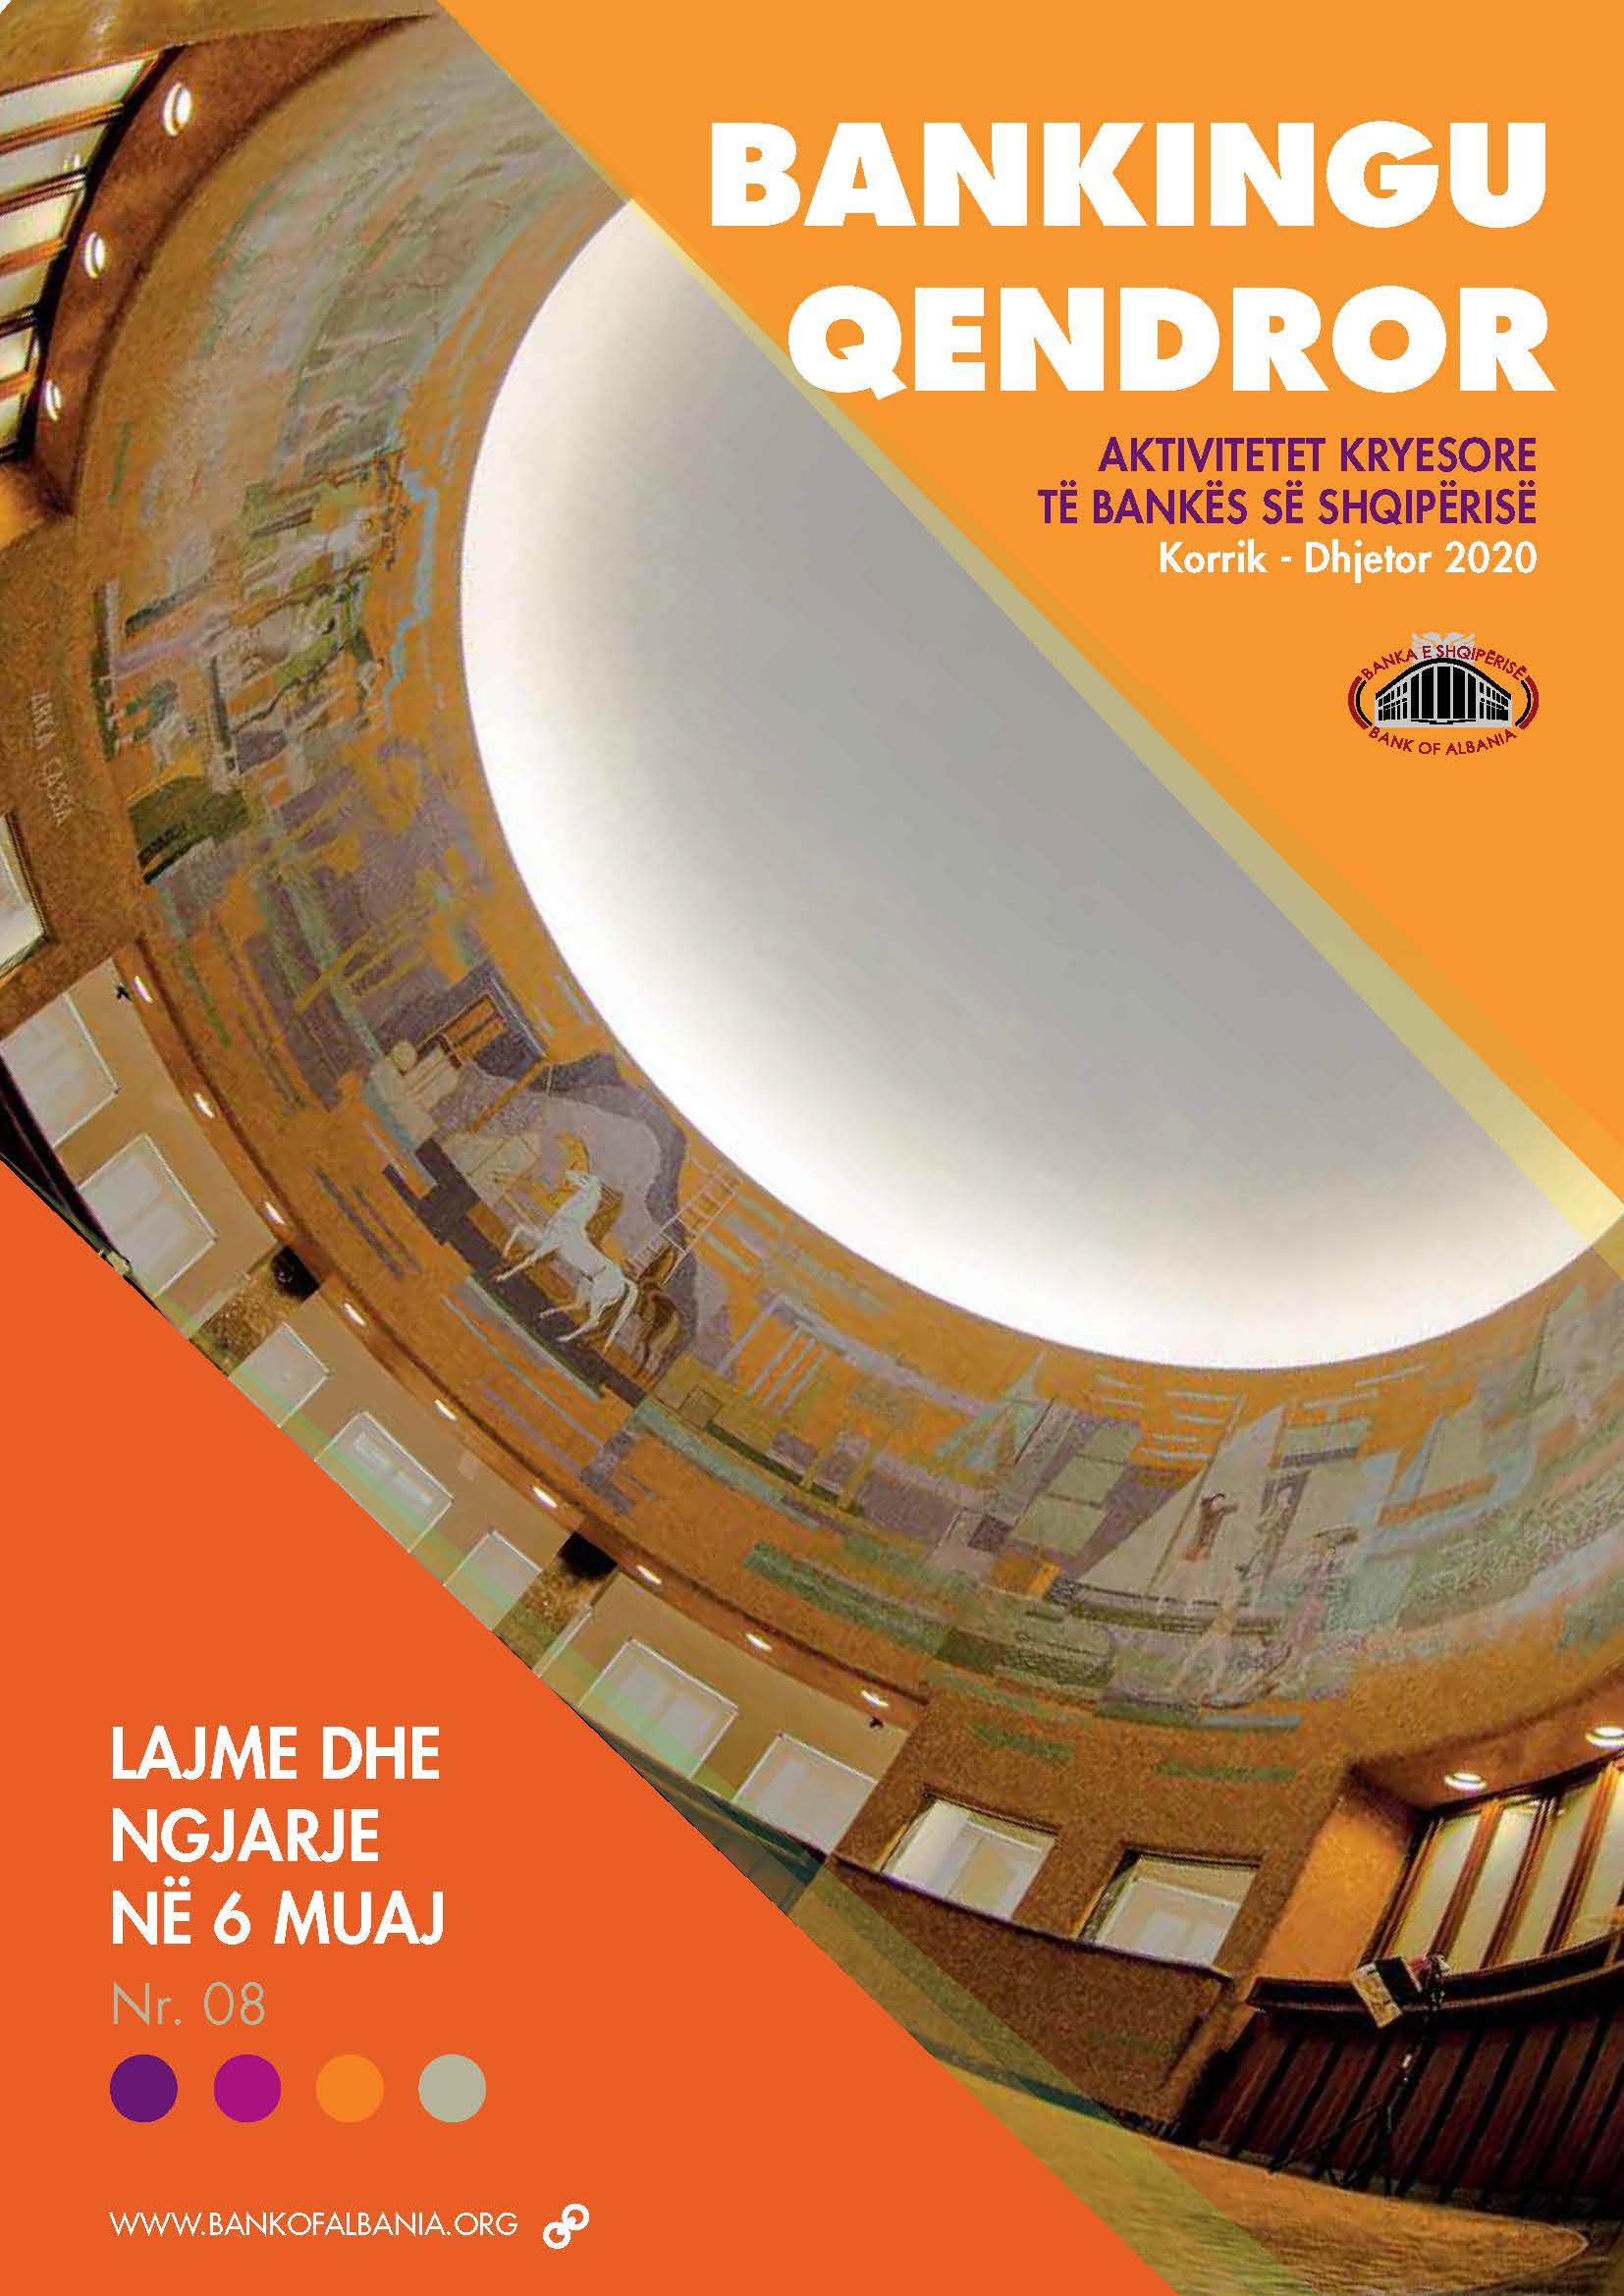 Central Banking magazine, July - December 2020